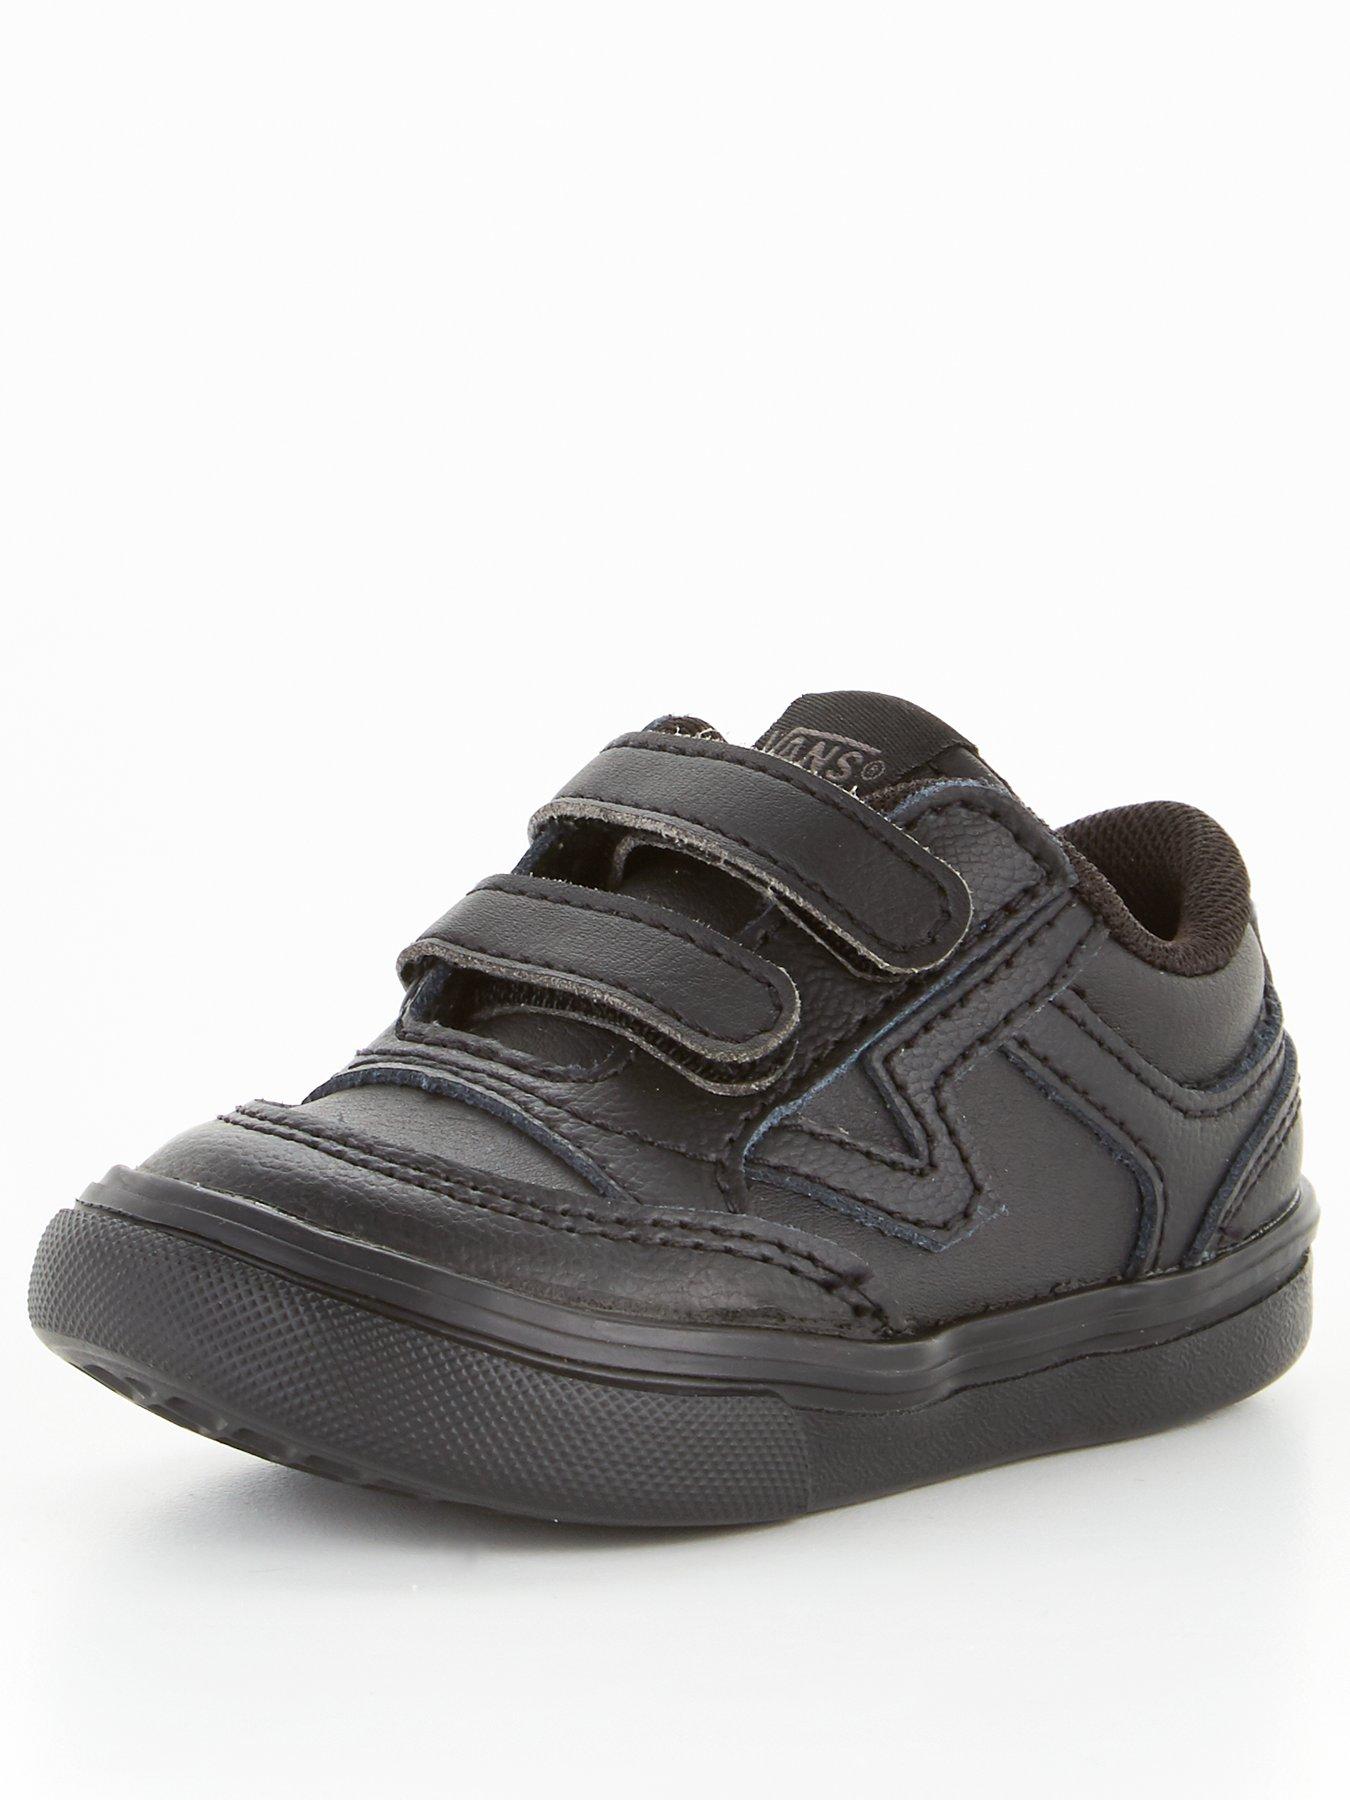 vans toddler shoes size 8